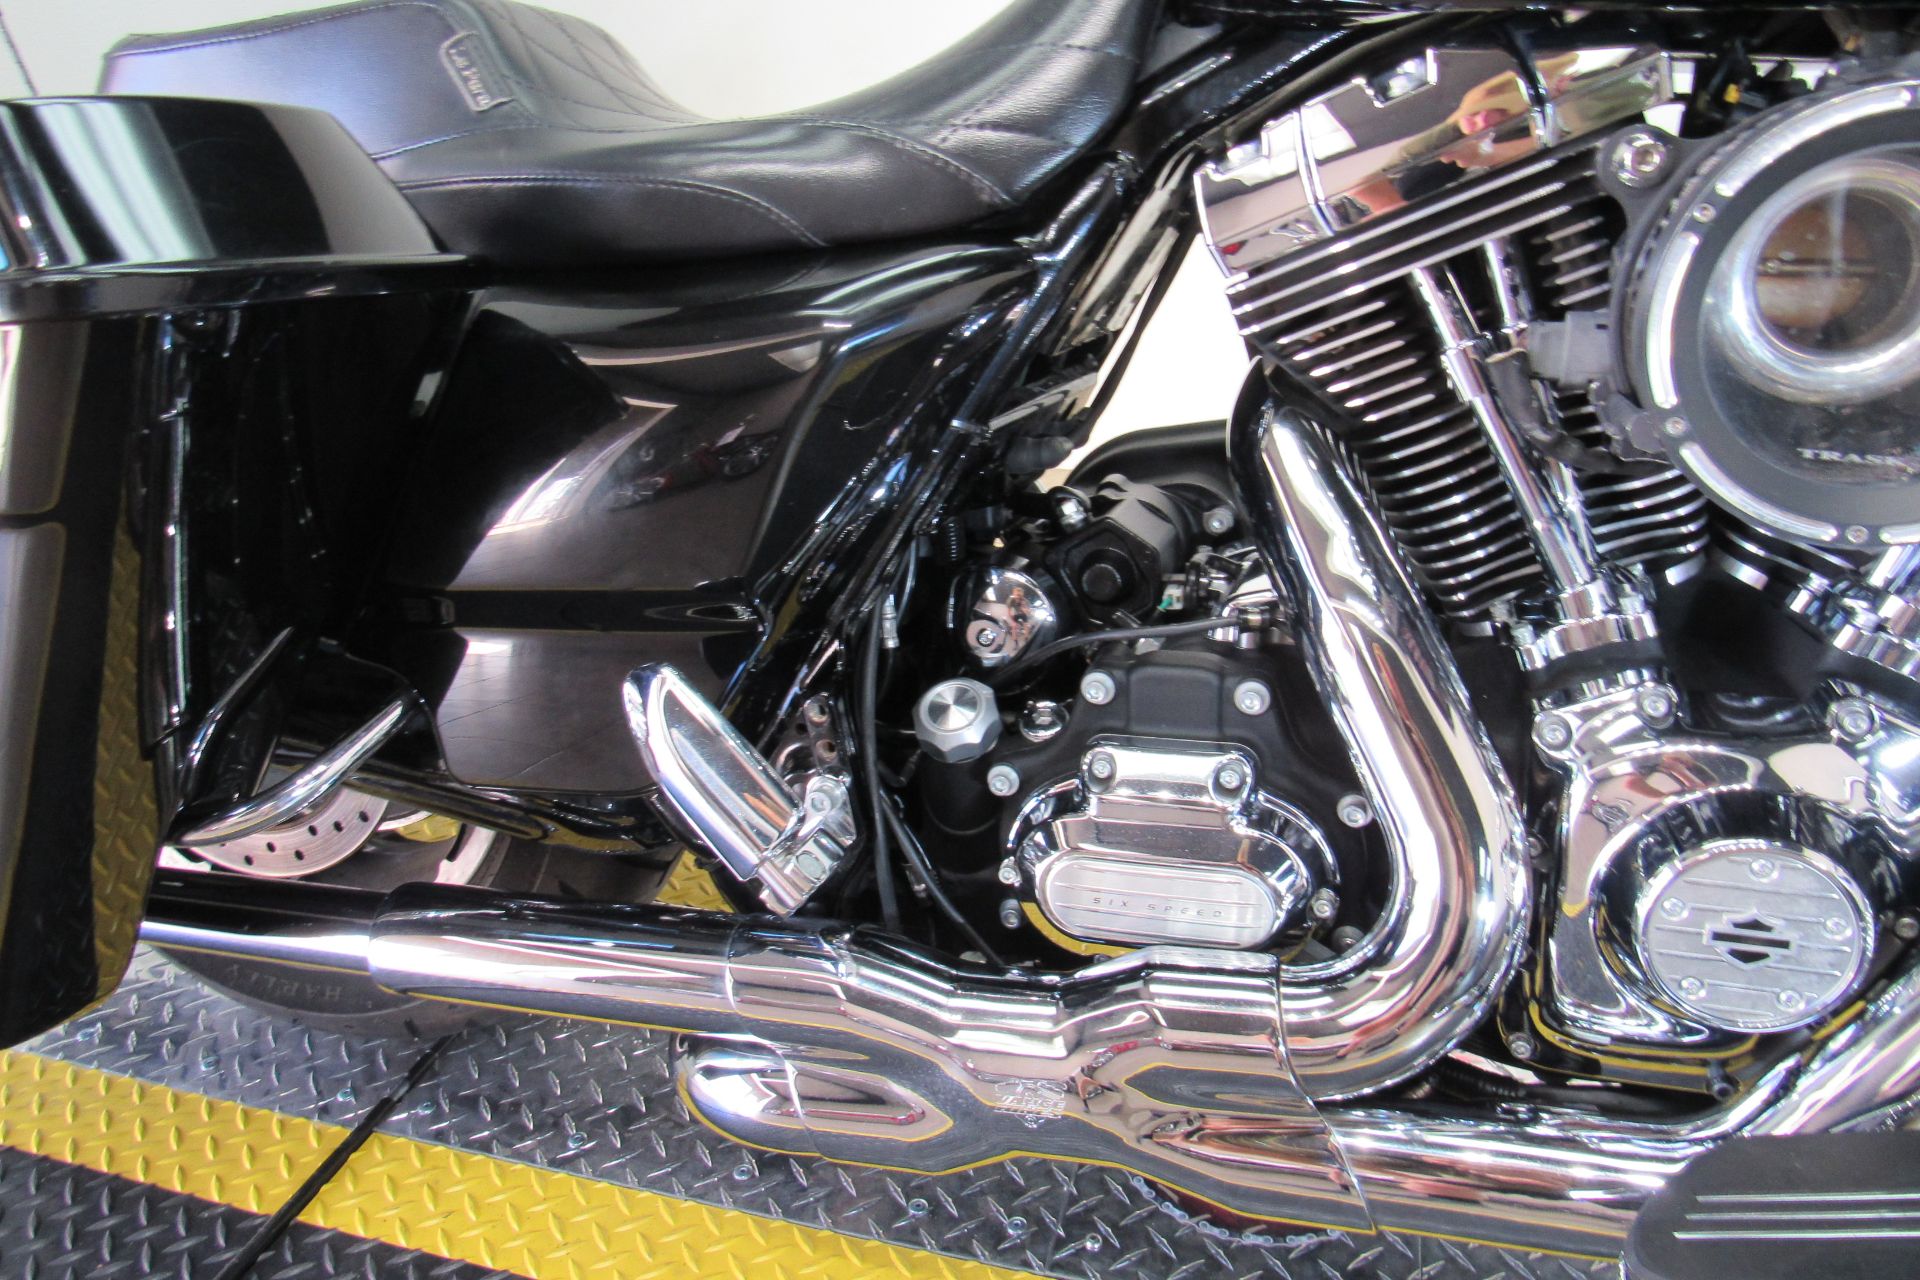 2011 Harley-Davidson Street Glide® in Temecula, California - Photo 13